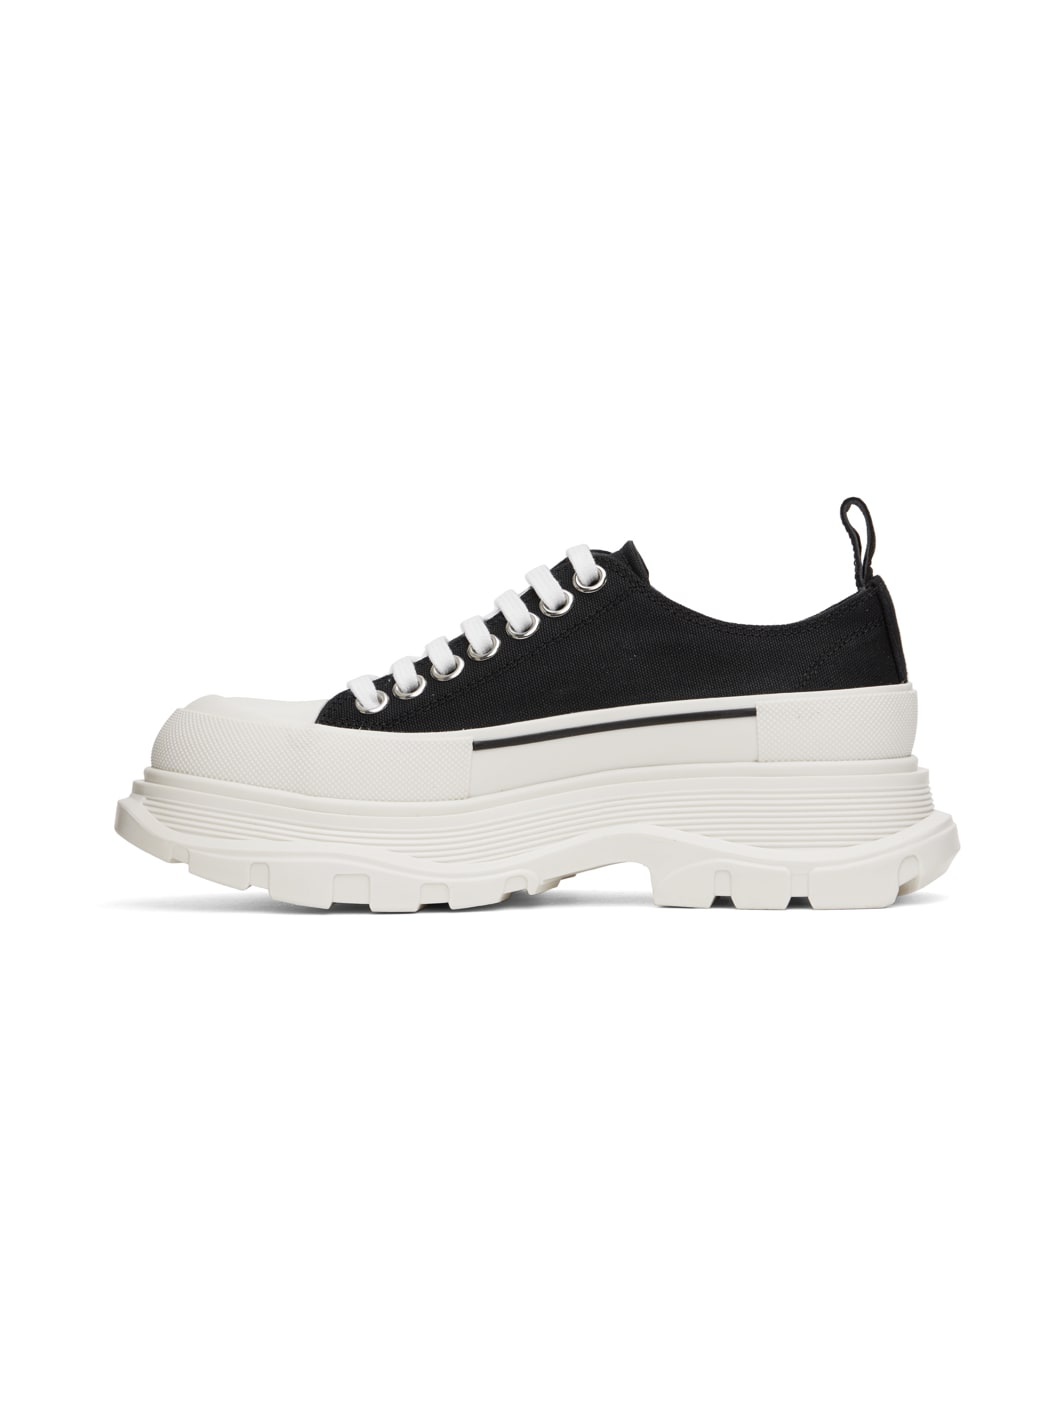 Black & White Slick Sneakers - 3